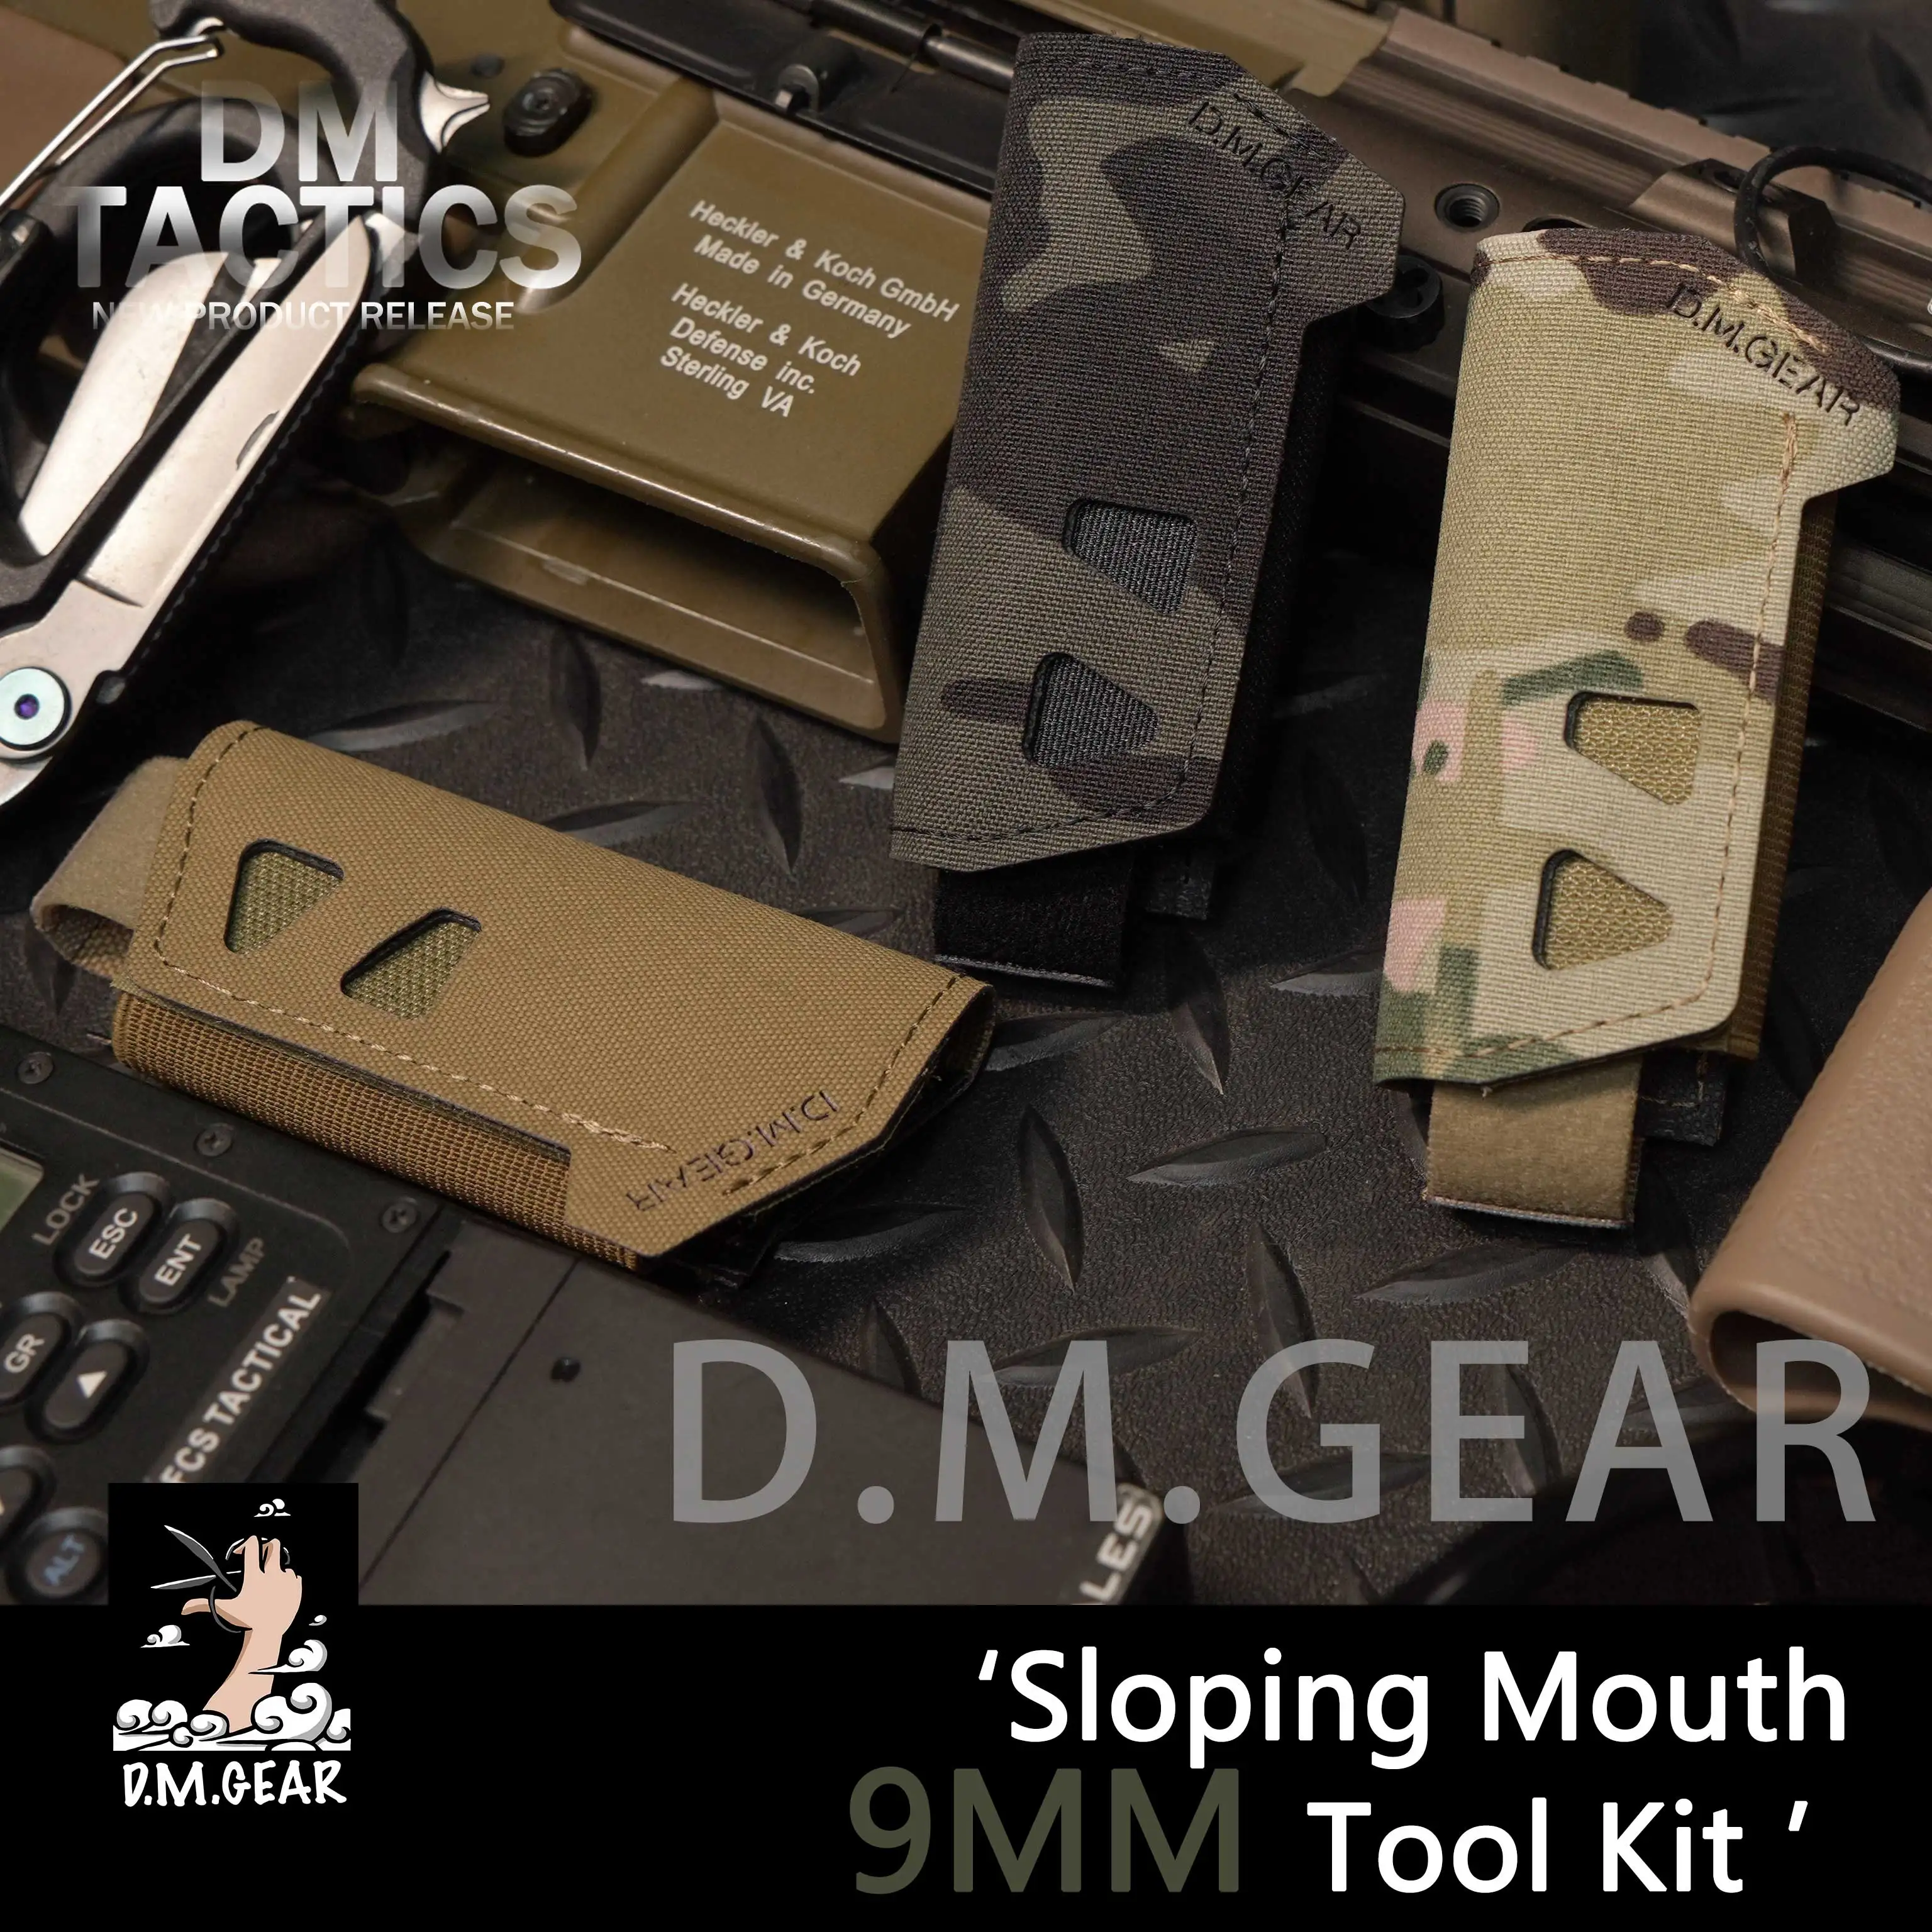 

Dmgear 9mm Magazine Pouch Tactical Holster Bag Quick Release Molle Carrier Air Gun Vest Gear Military Accessories Outdoor Hunt